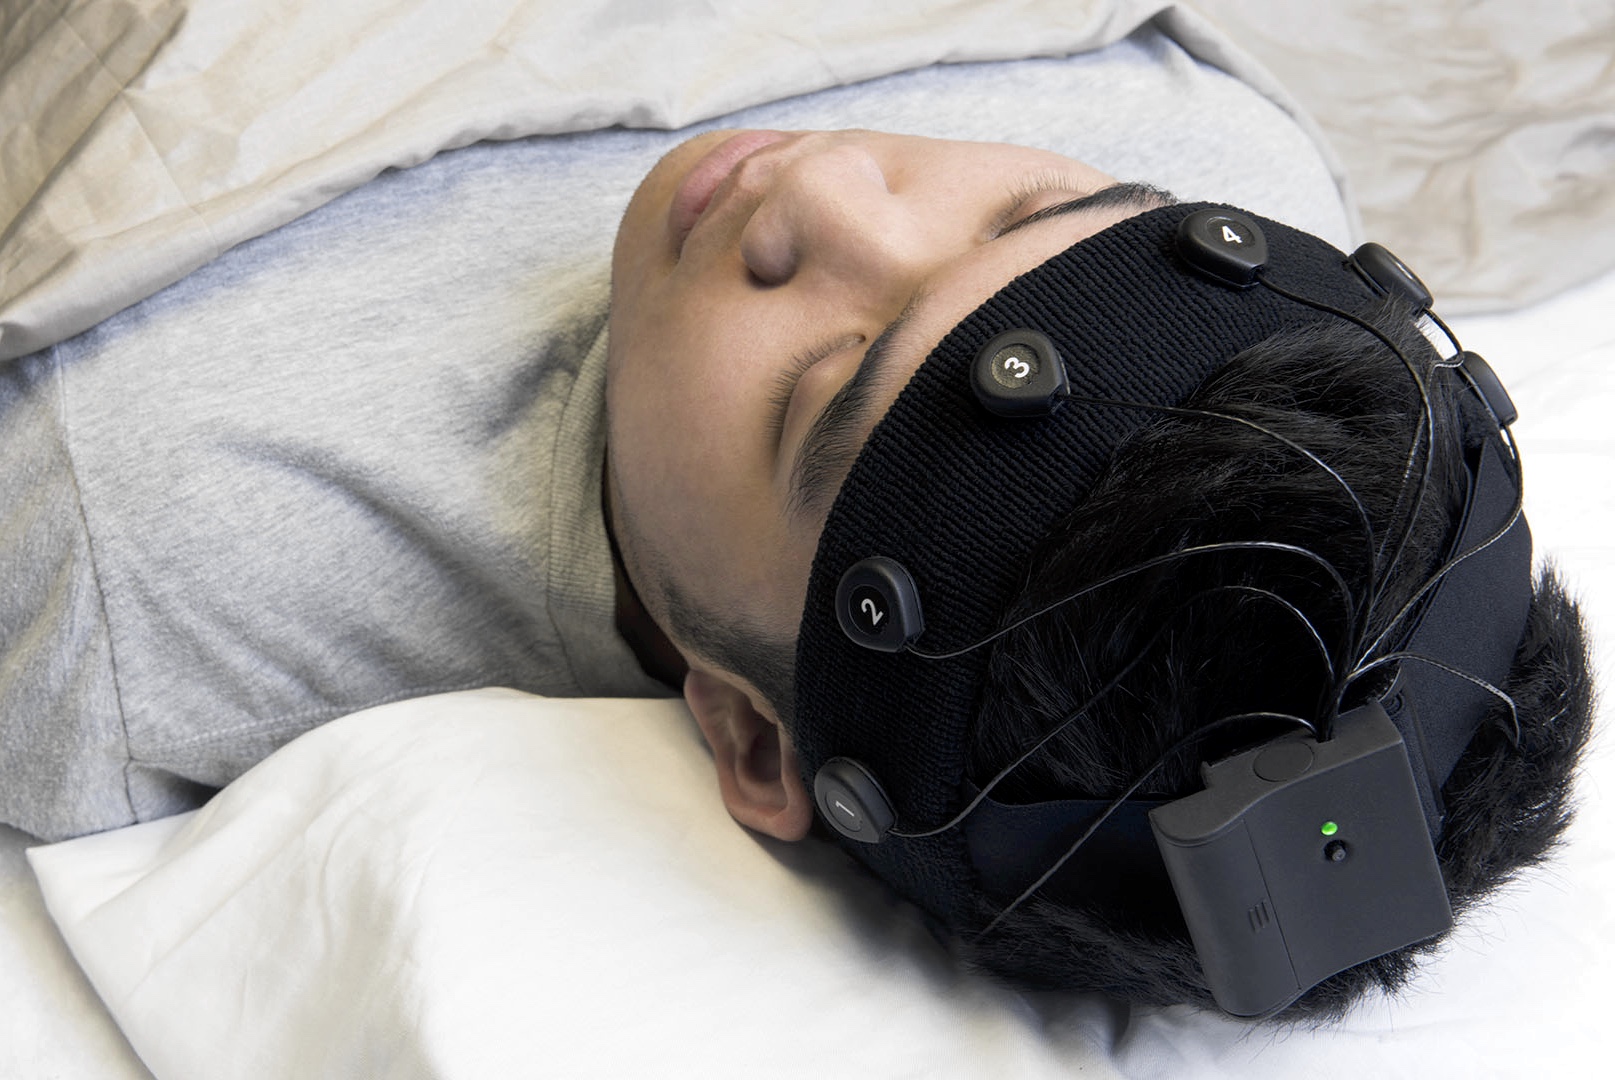 Ээг видеомониторинг сна. ЭЭГ видеомониторинг. Шлем для сна. Электроэнцефалография сна. Видеомониторинг головного мозга.